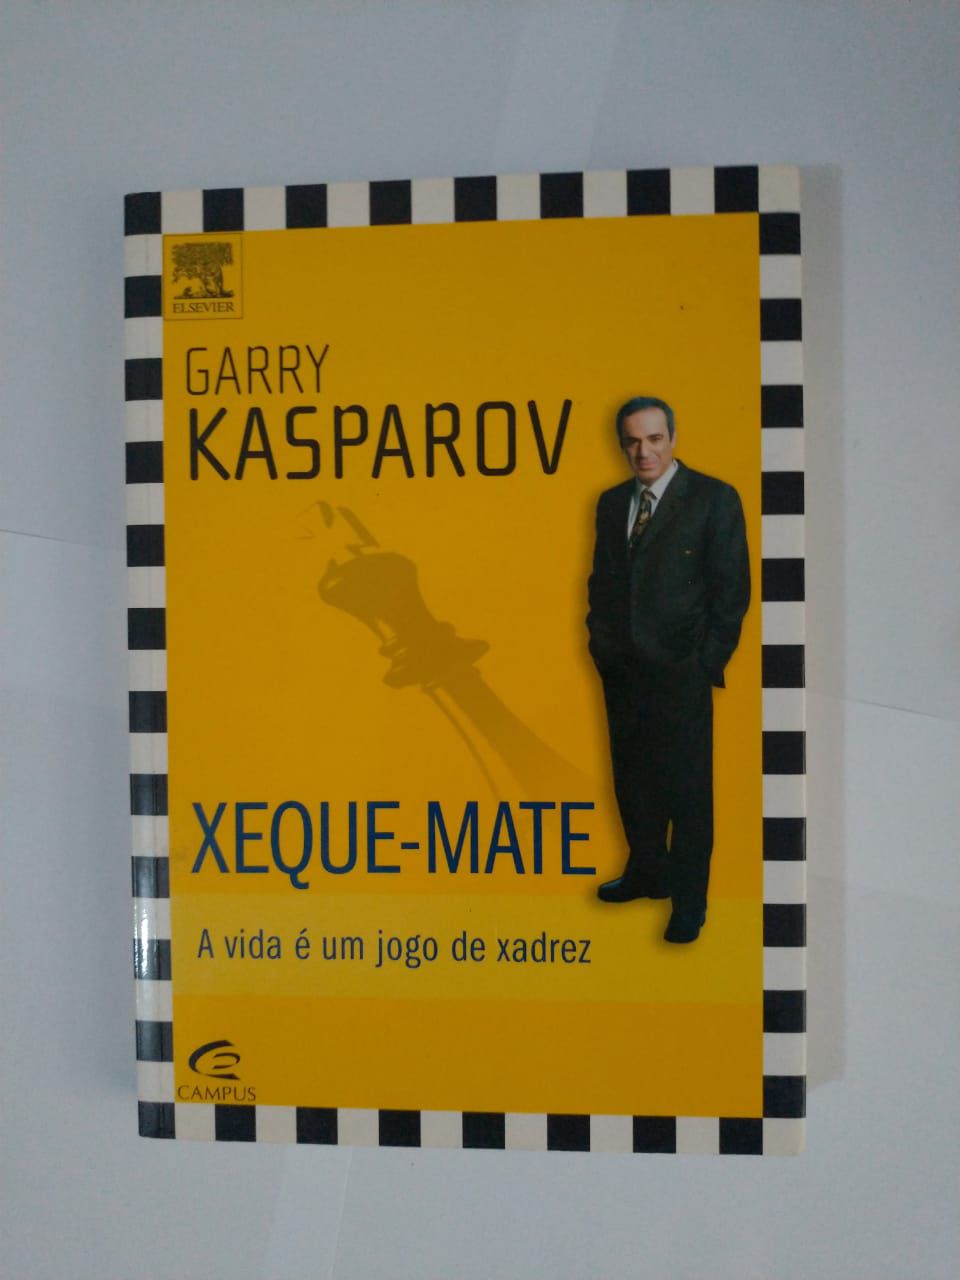 Aprenda Xadrez com Garry Kasparov - Seboterapia - Livros